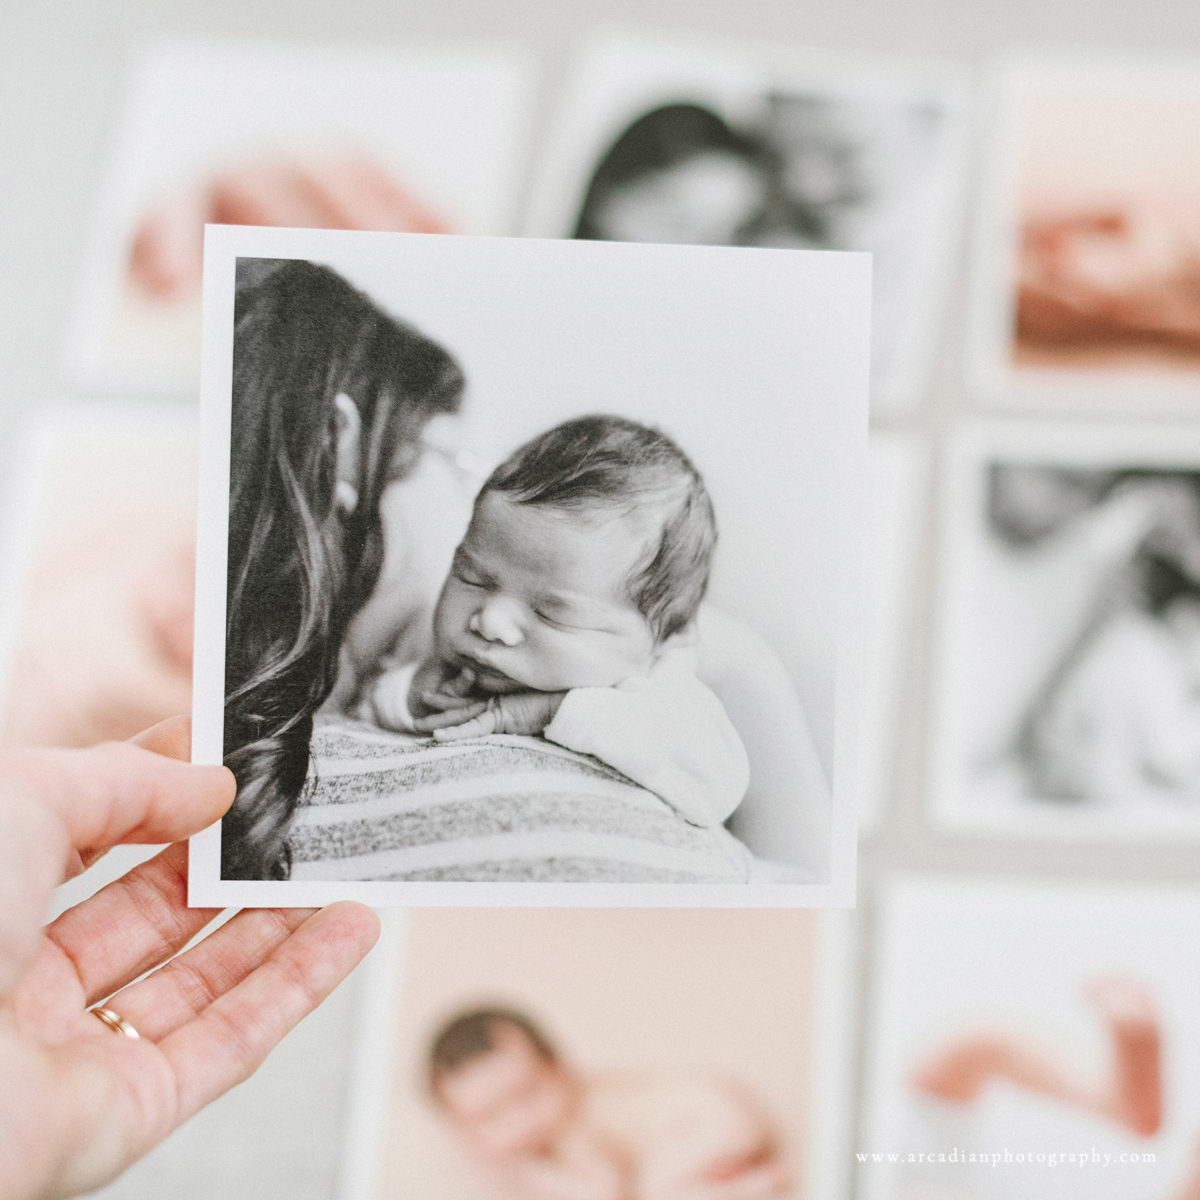 Print your newborn photos.